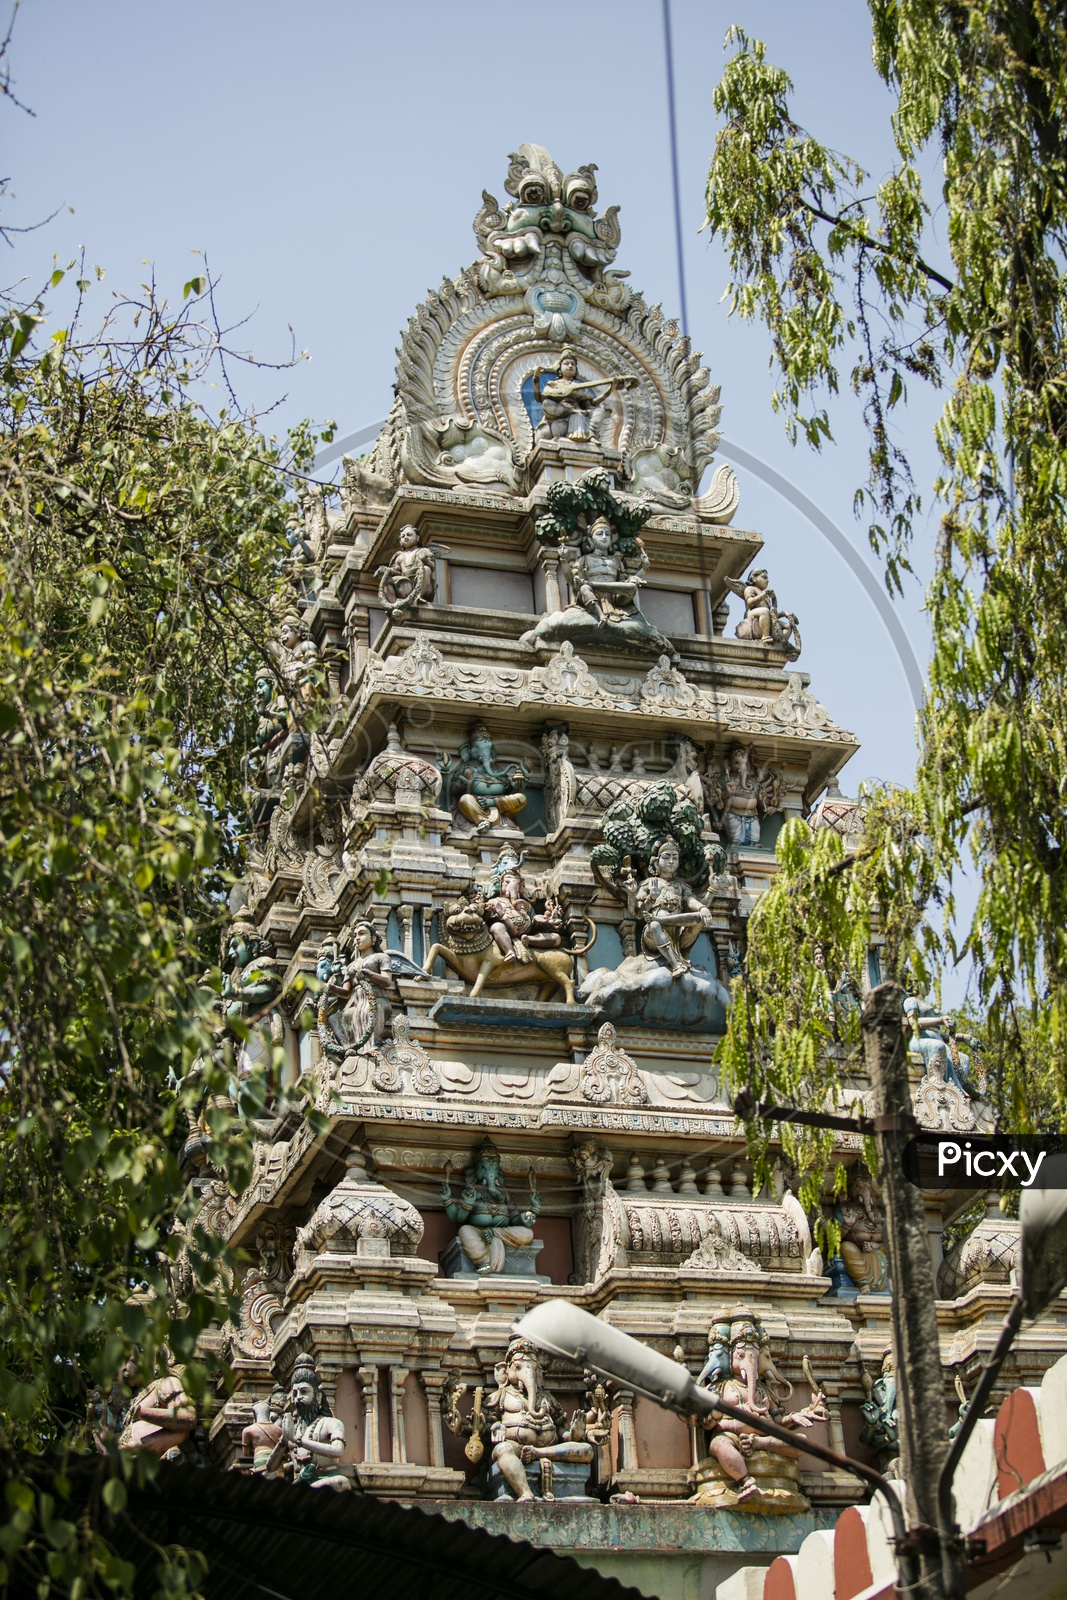 the vimana, Bull temple